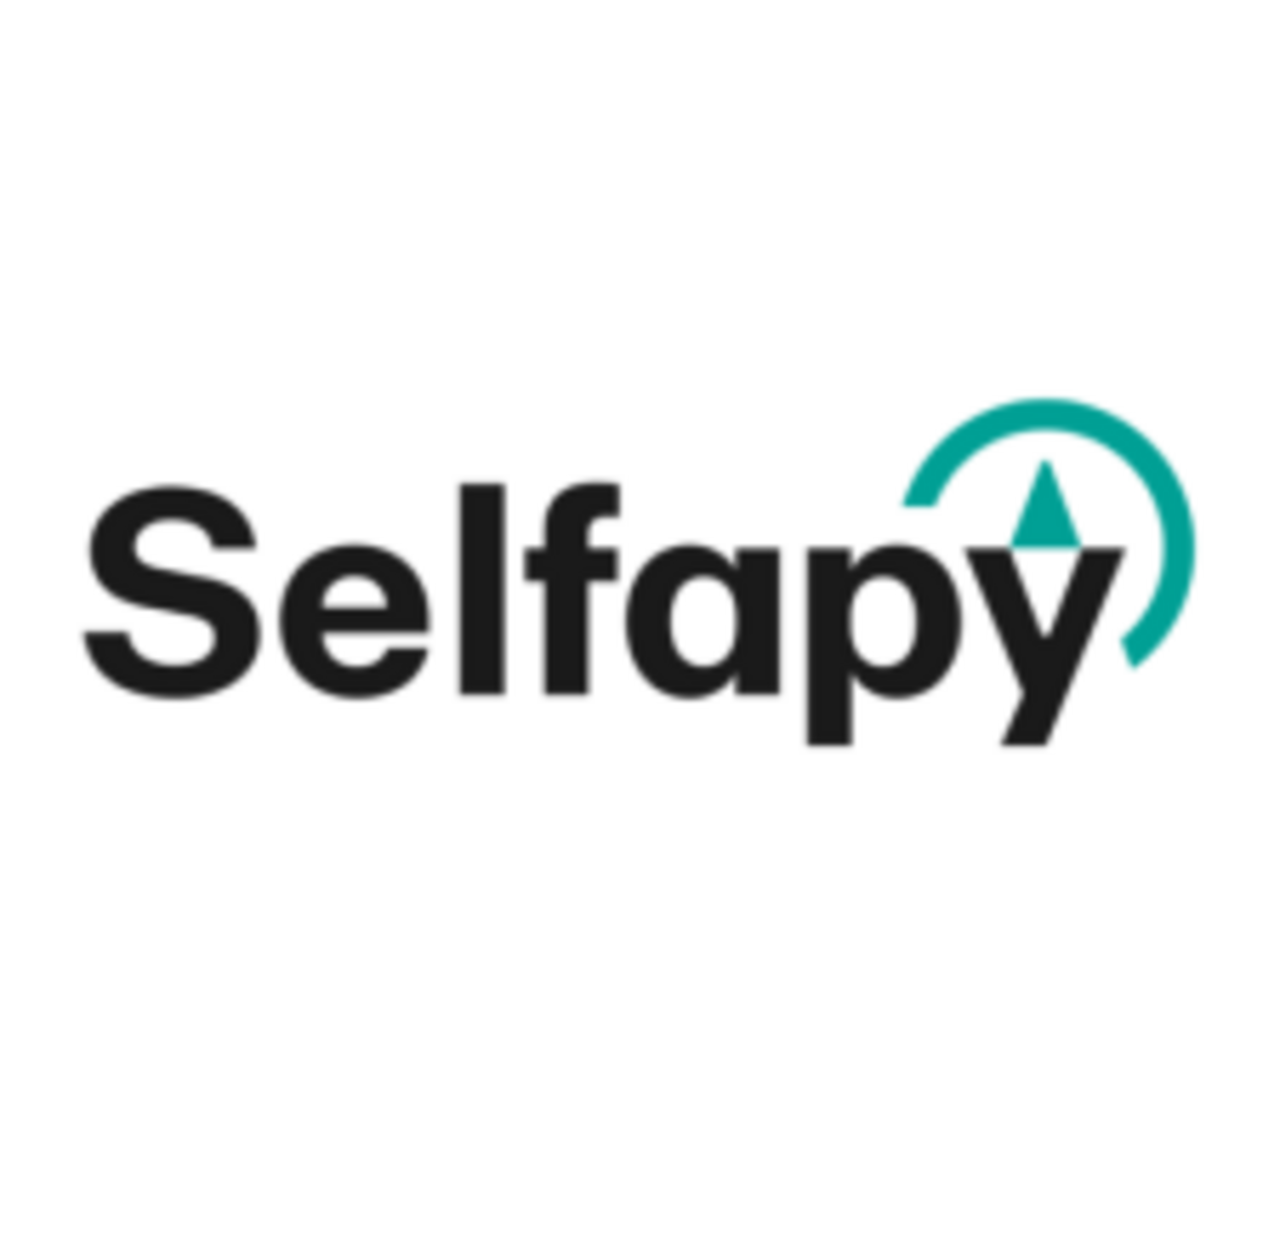 Logo Selfapy